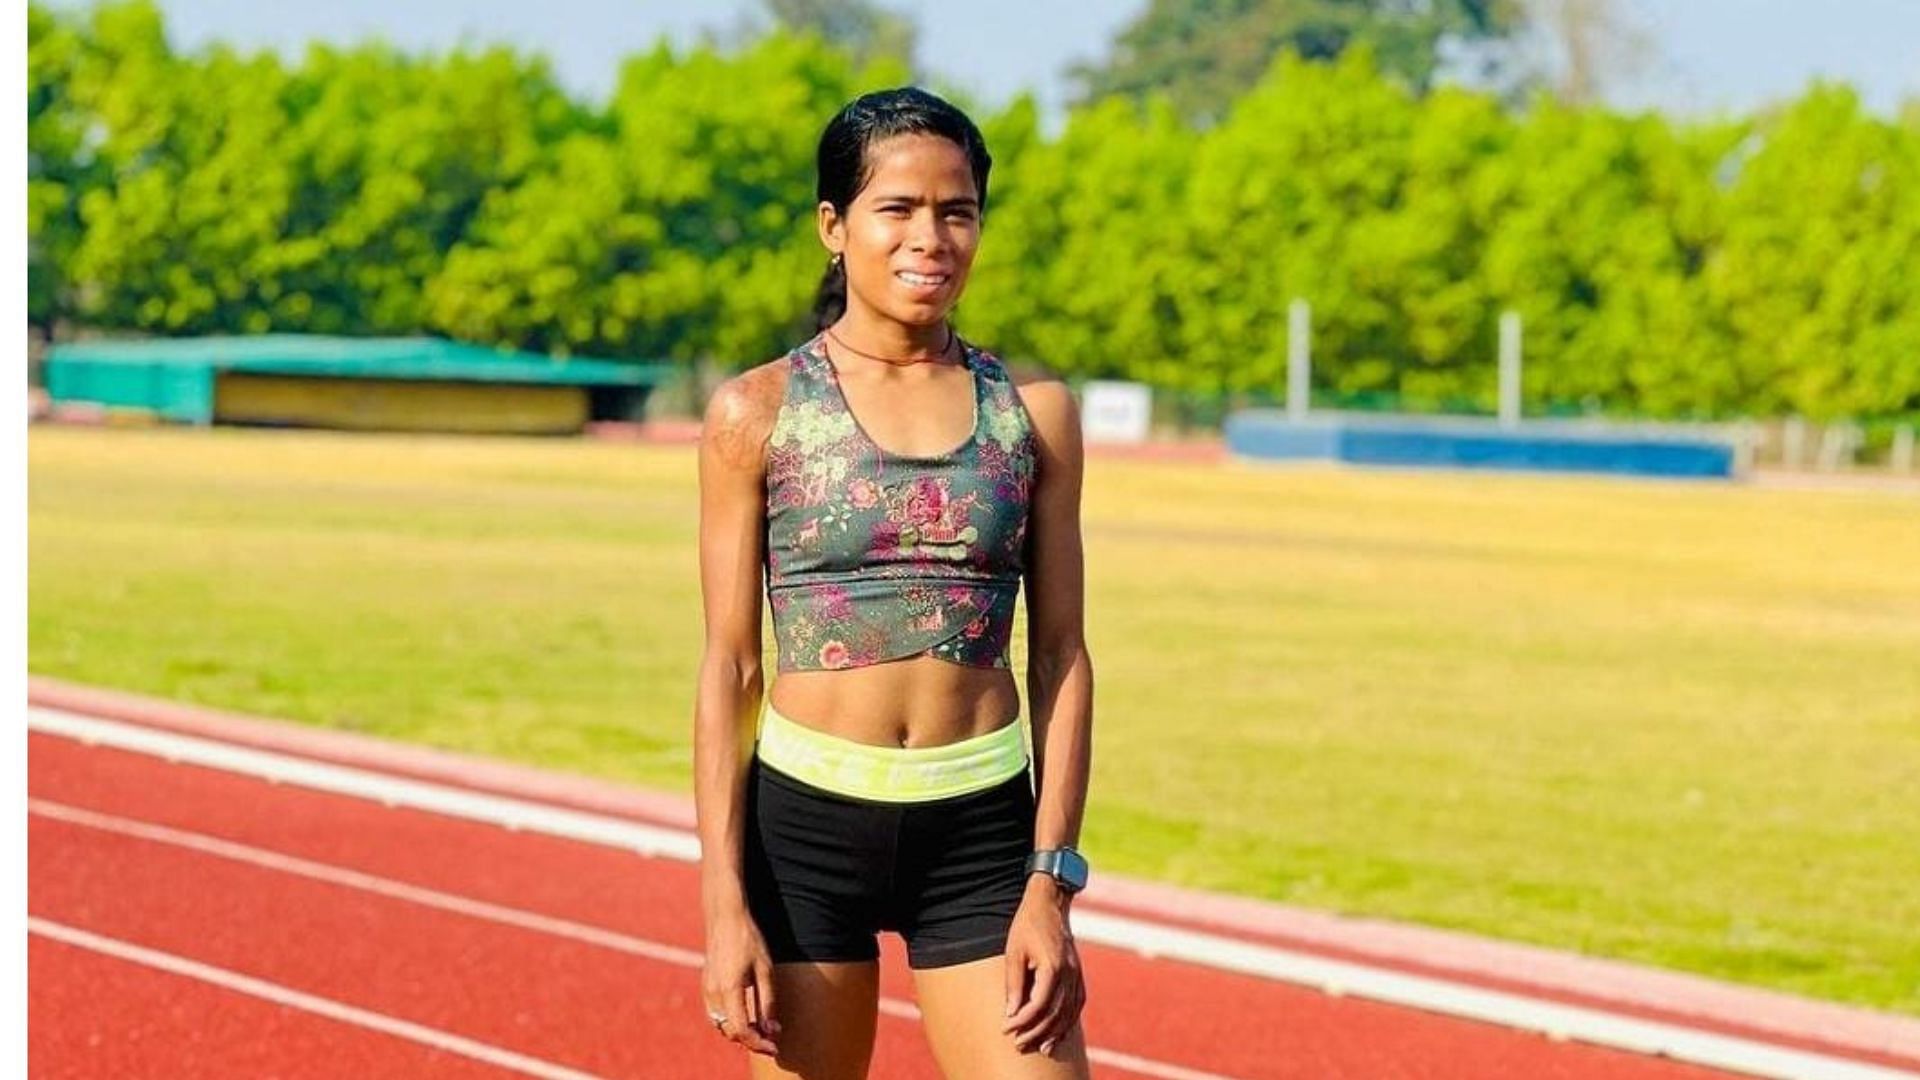 26-year-old Indian middle-distance runner Lili Das (Image Credits - Lili Das Instagram)